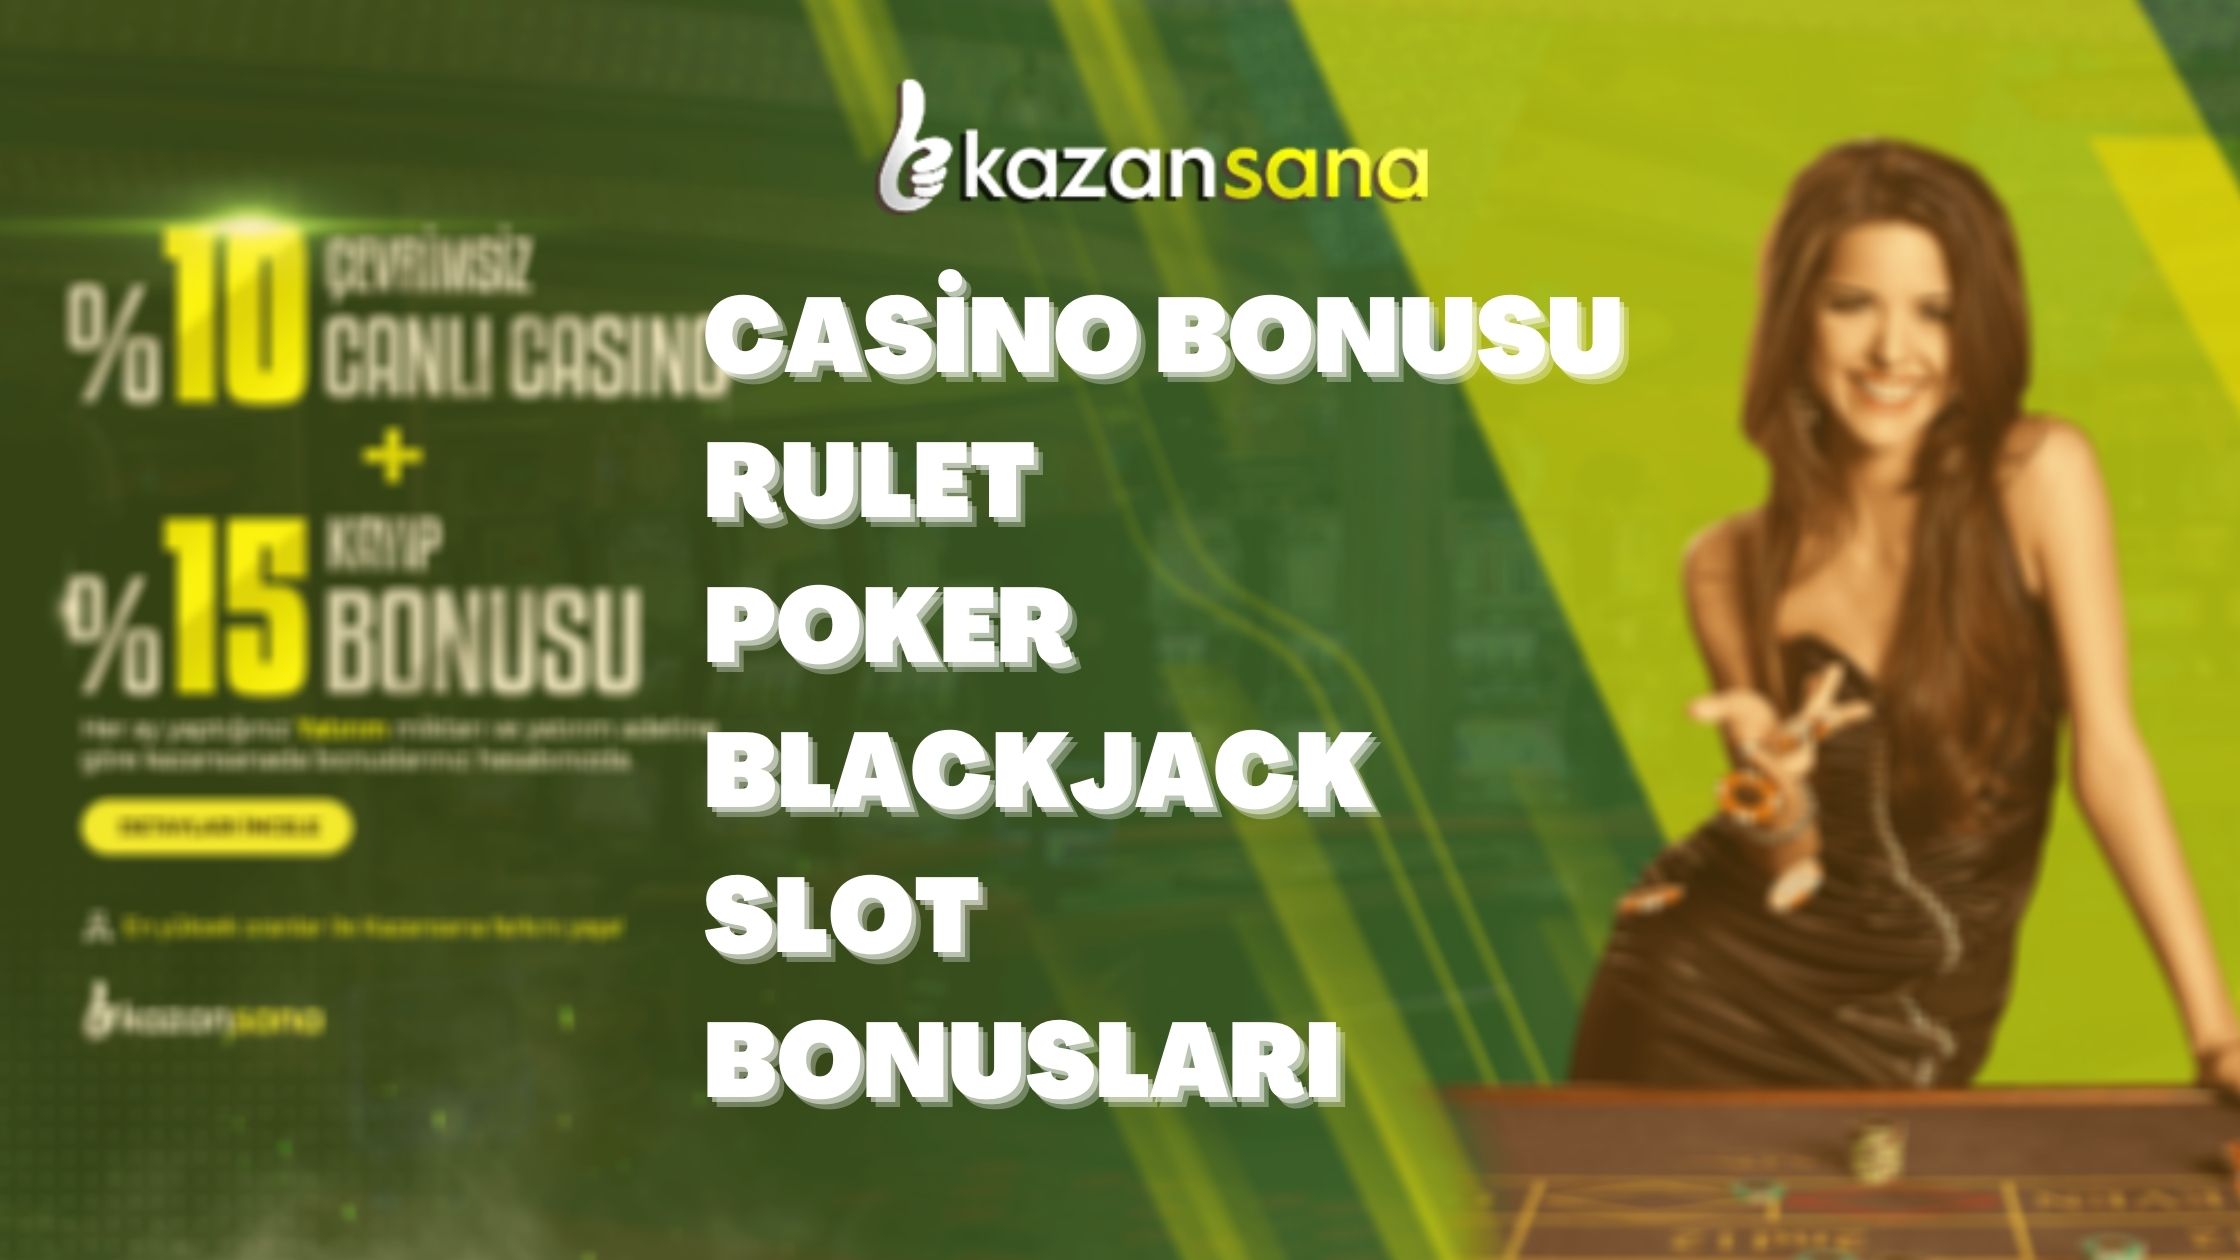 Kazansana Casino Bonusu